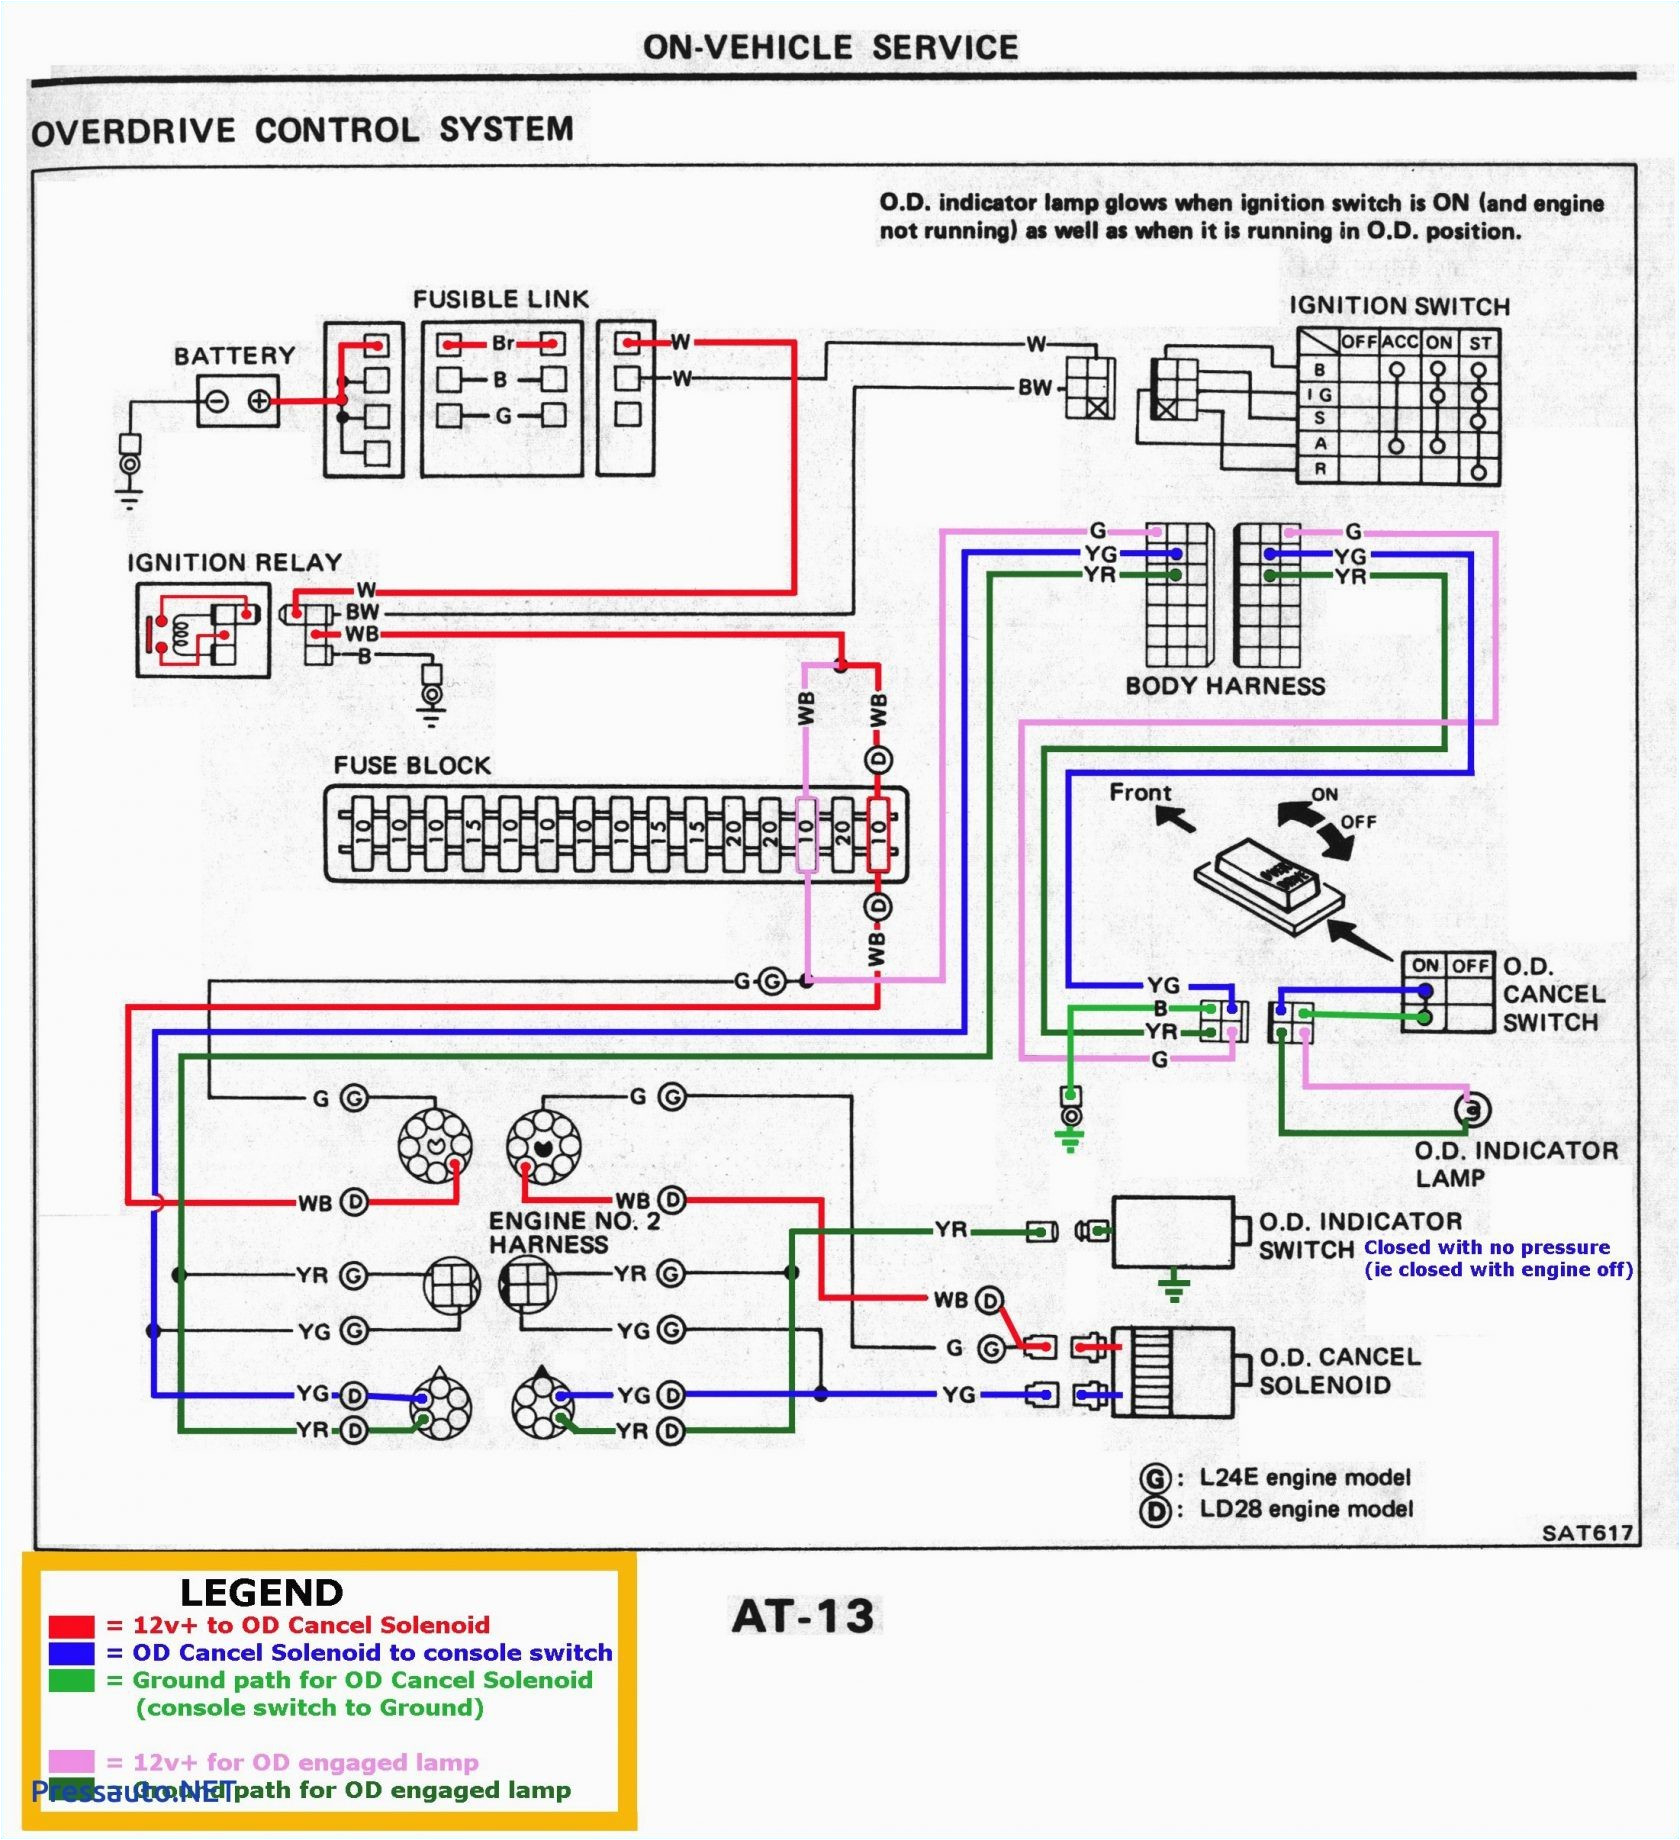 panel wiring diagram pdf data diagram schematic circuit breaker wiring diagram pdf